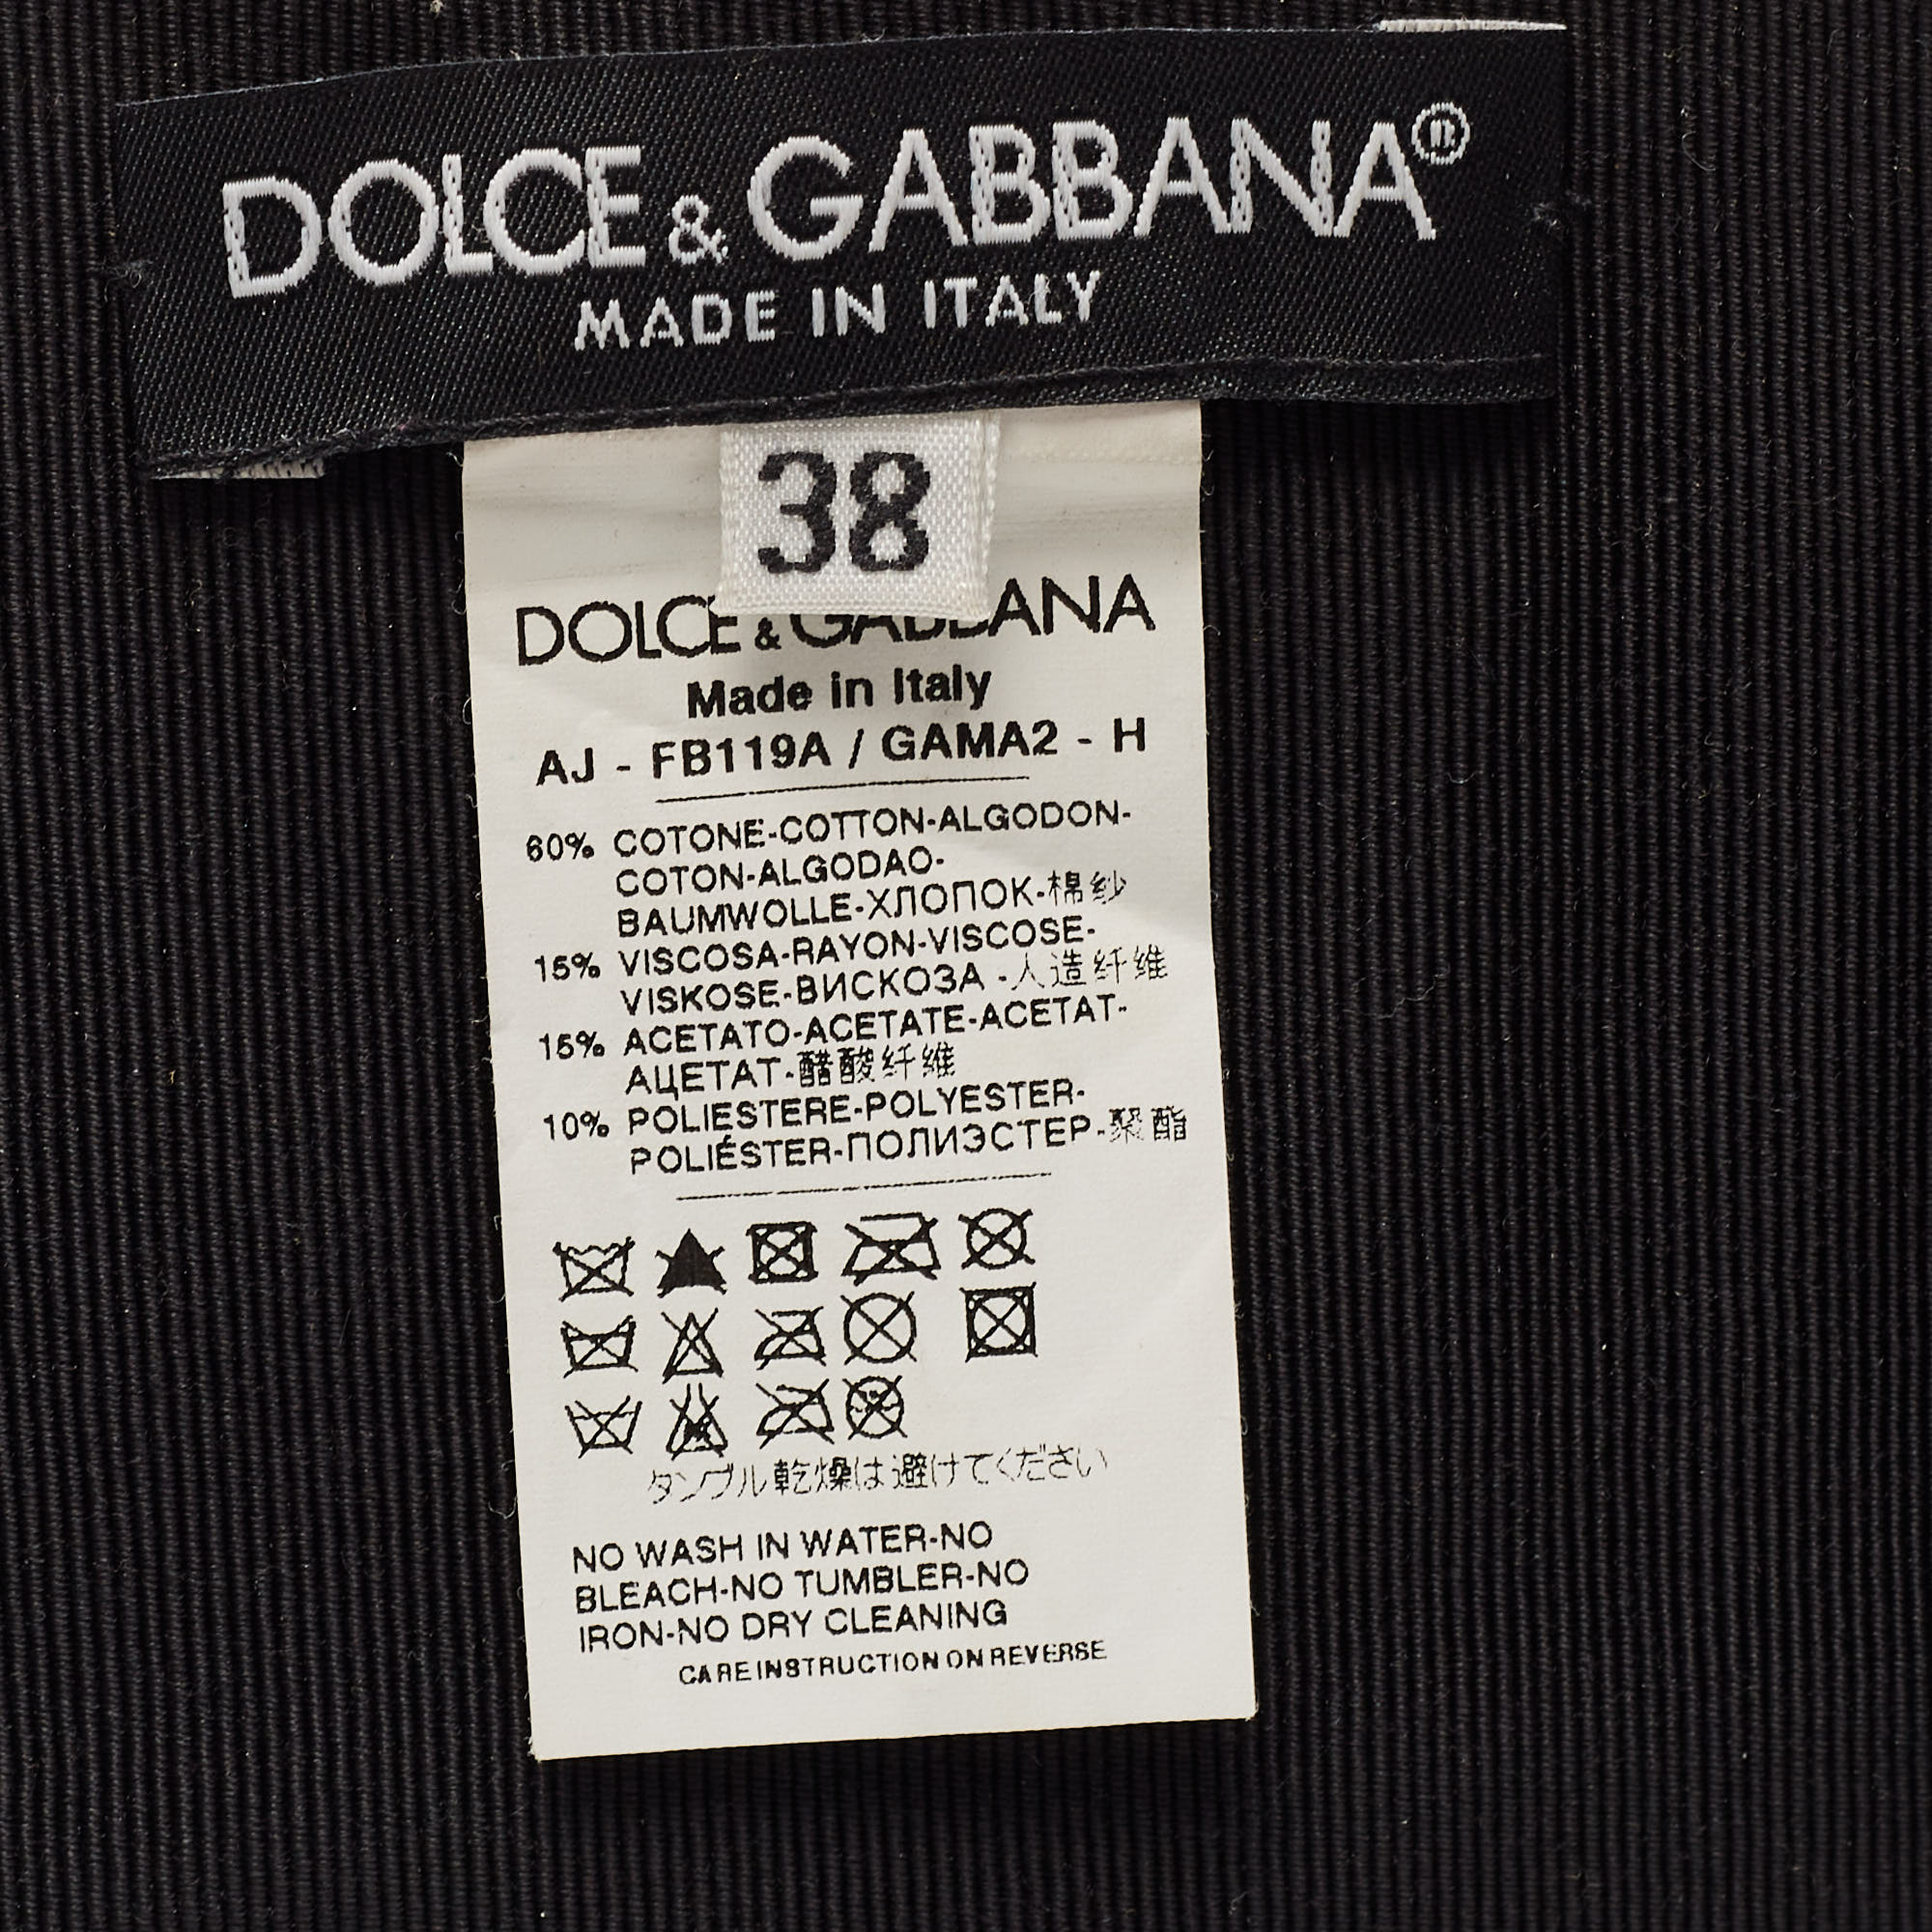 Dolce & Gabbana Tri Color Stripe Elastic Butterfly Crystals Waist Belt